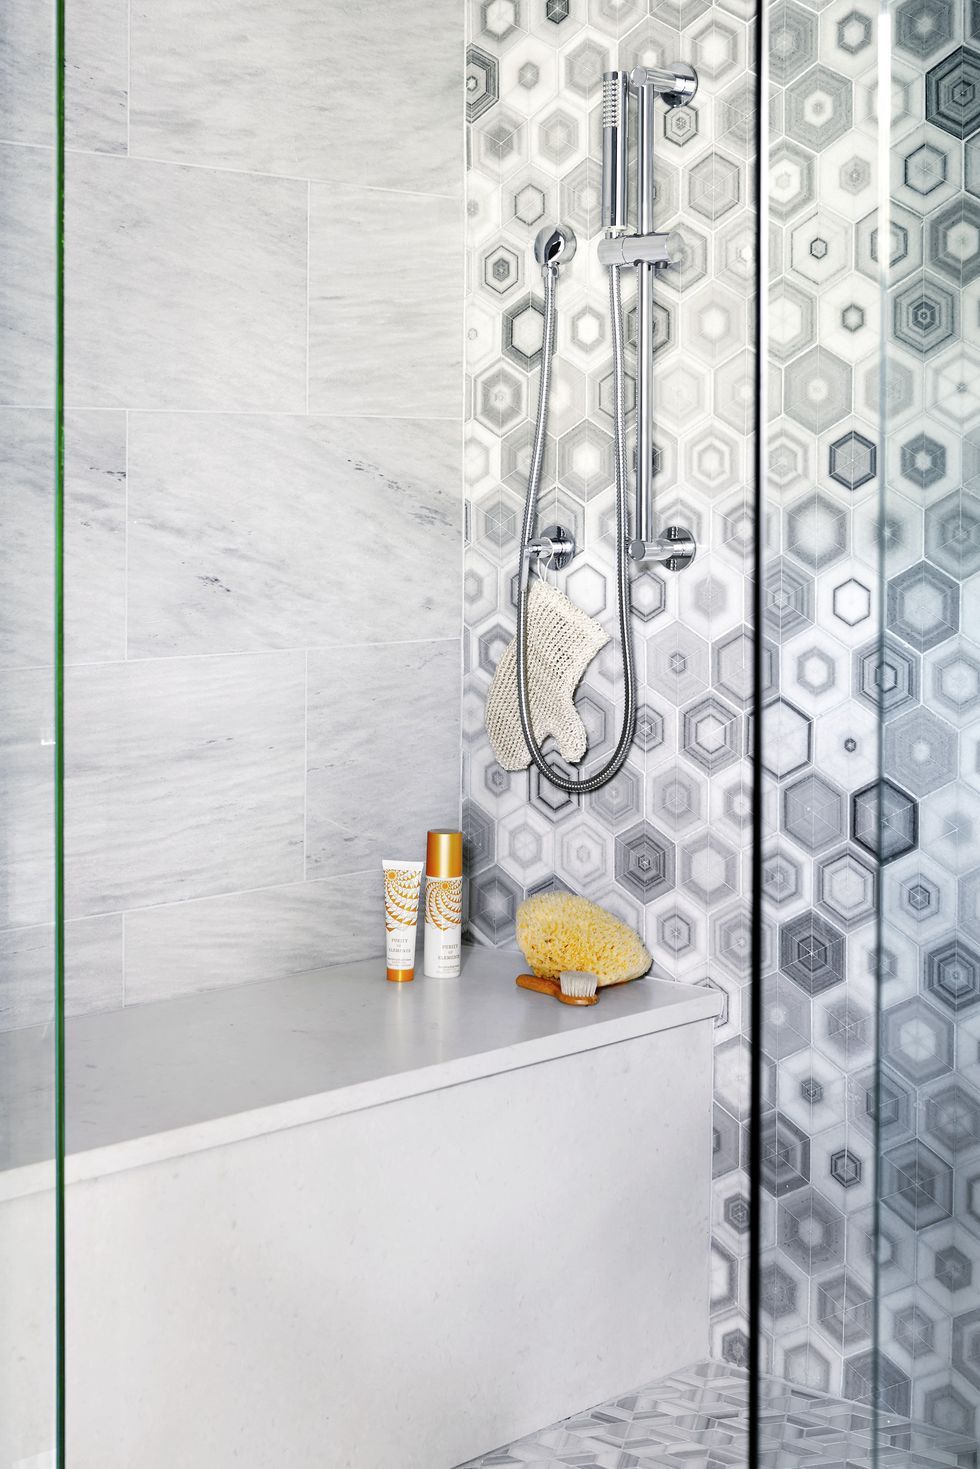 20 Popular Bathroom Tile Ideas - Bathroom Wall and Floor Tiles